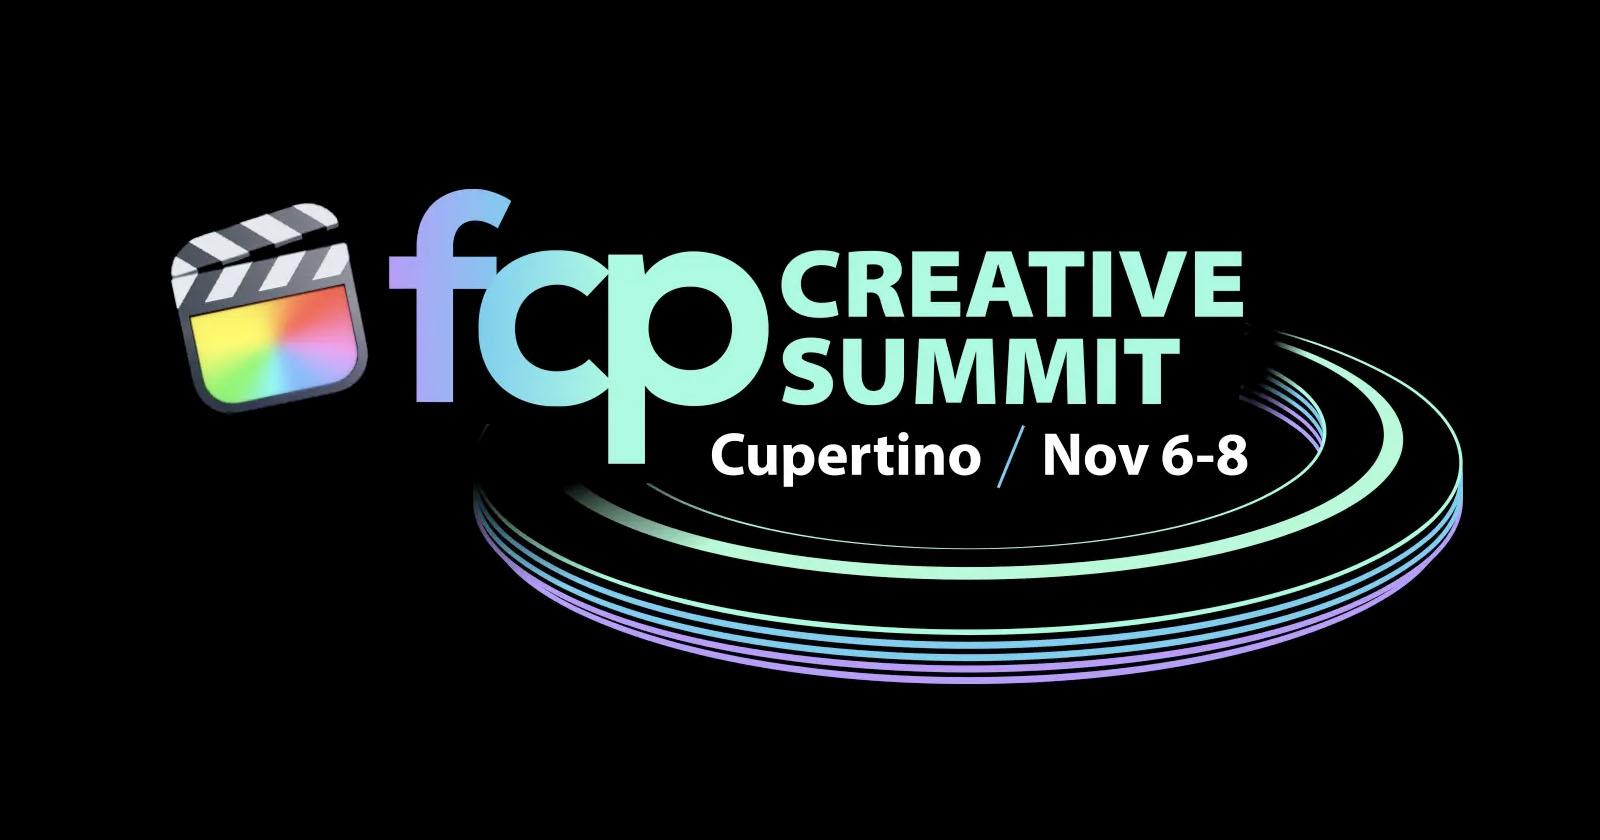 The Final Cut Pro Creative Summit Kicks-Off at Apple Park Next Month